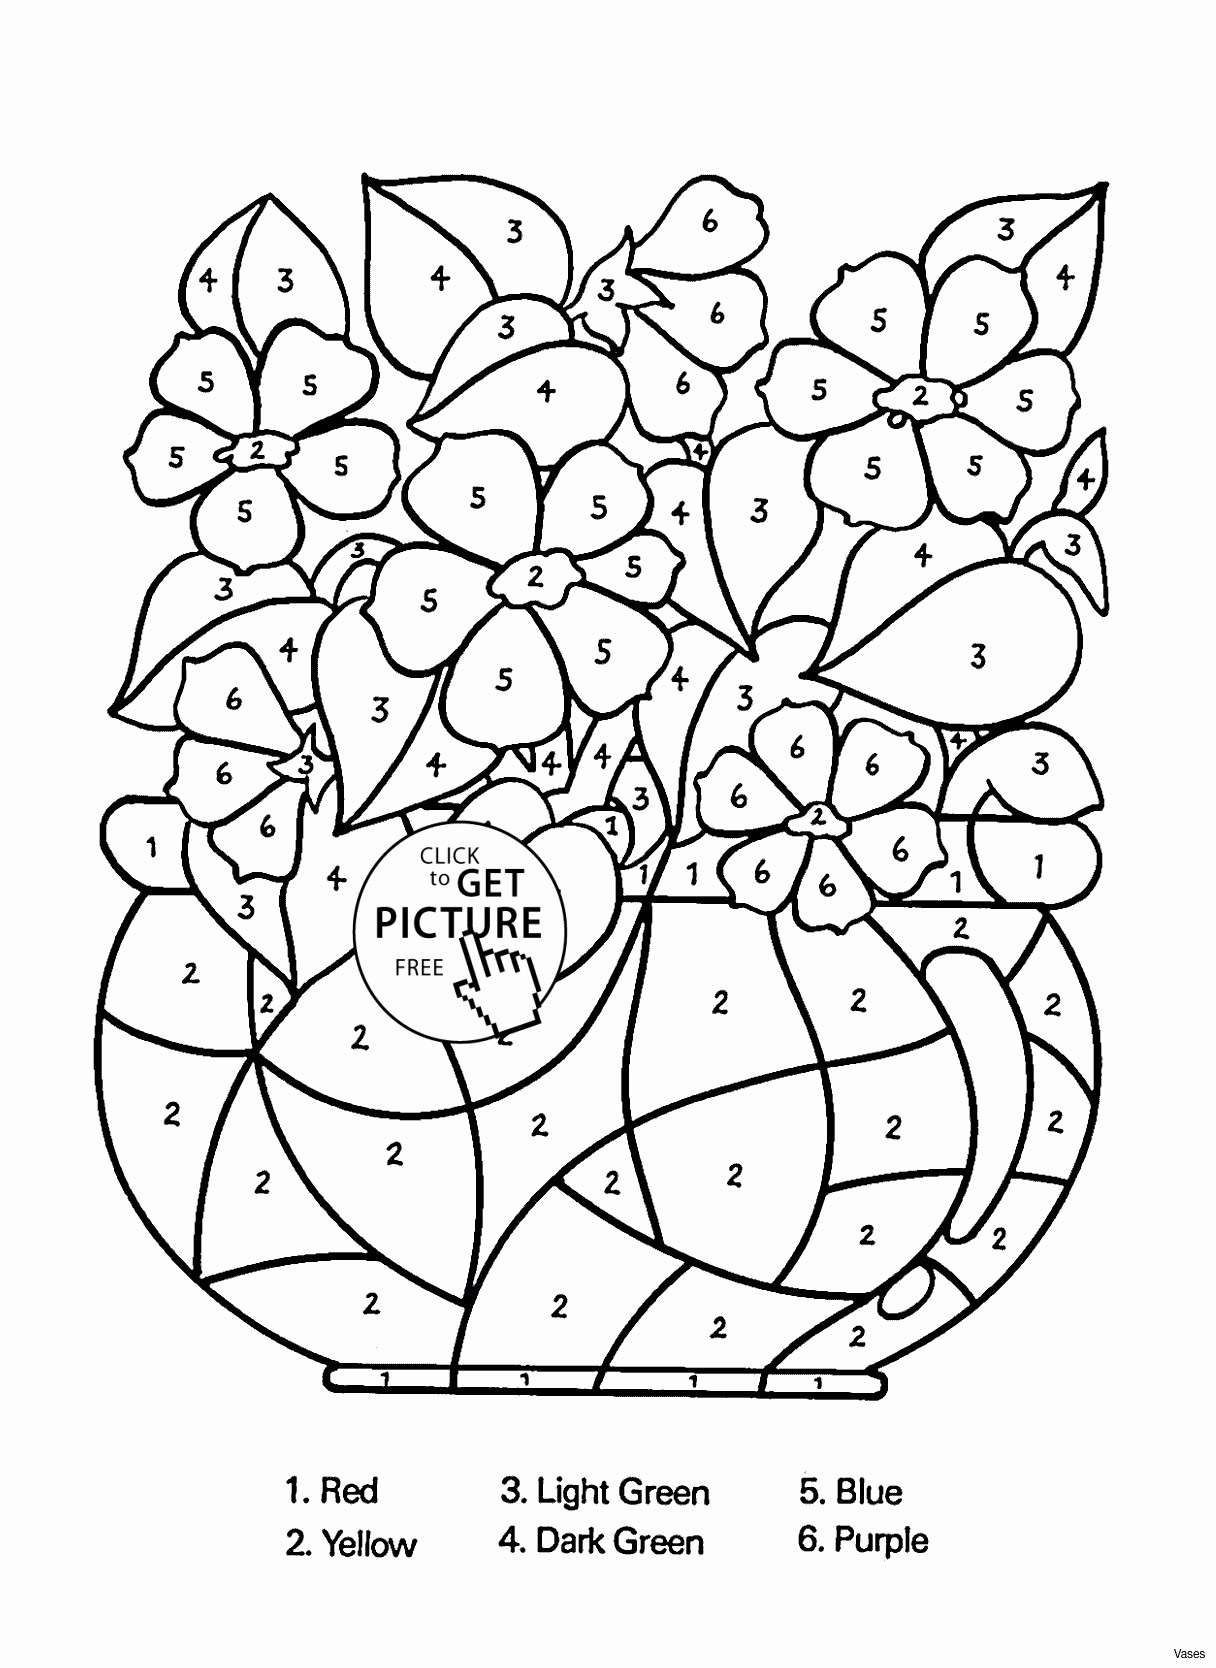 clear glass bubble bowl vase of white glass vase elegant vases flower vase coloring page pages with white glass vase elegant vases flower vase coloring page pages flowers in a top i 0d